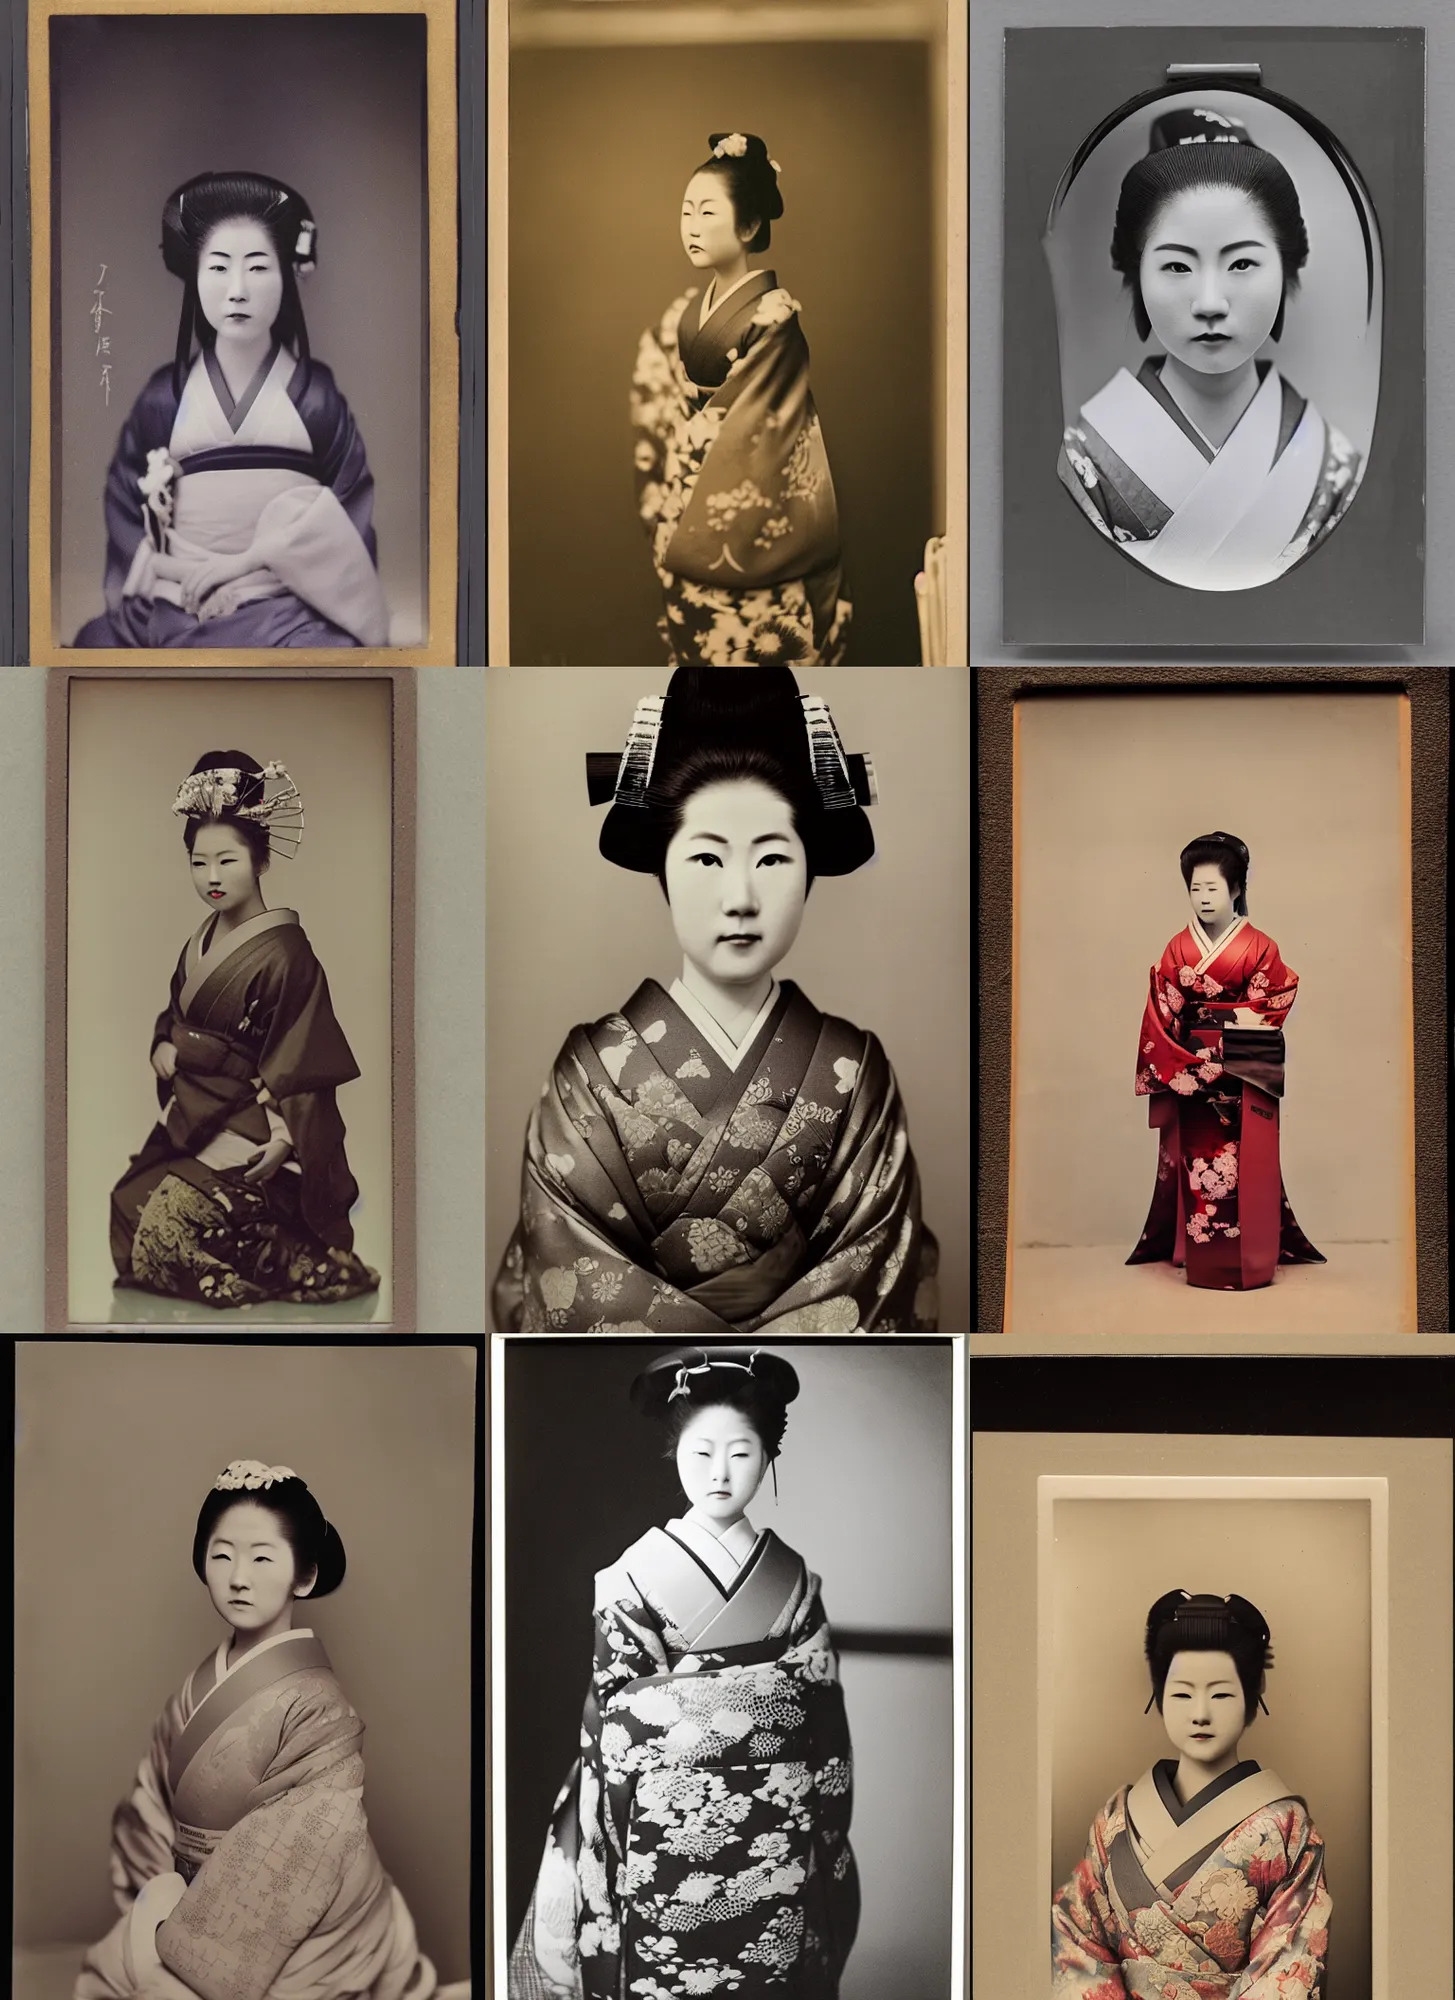 Prompt: Portrait Photograph of a Japanese Geisha Heliochrome Plate